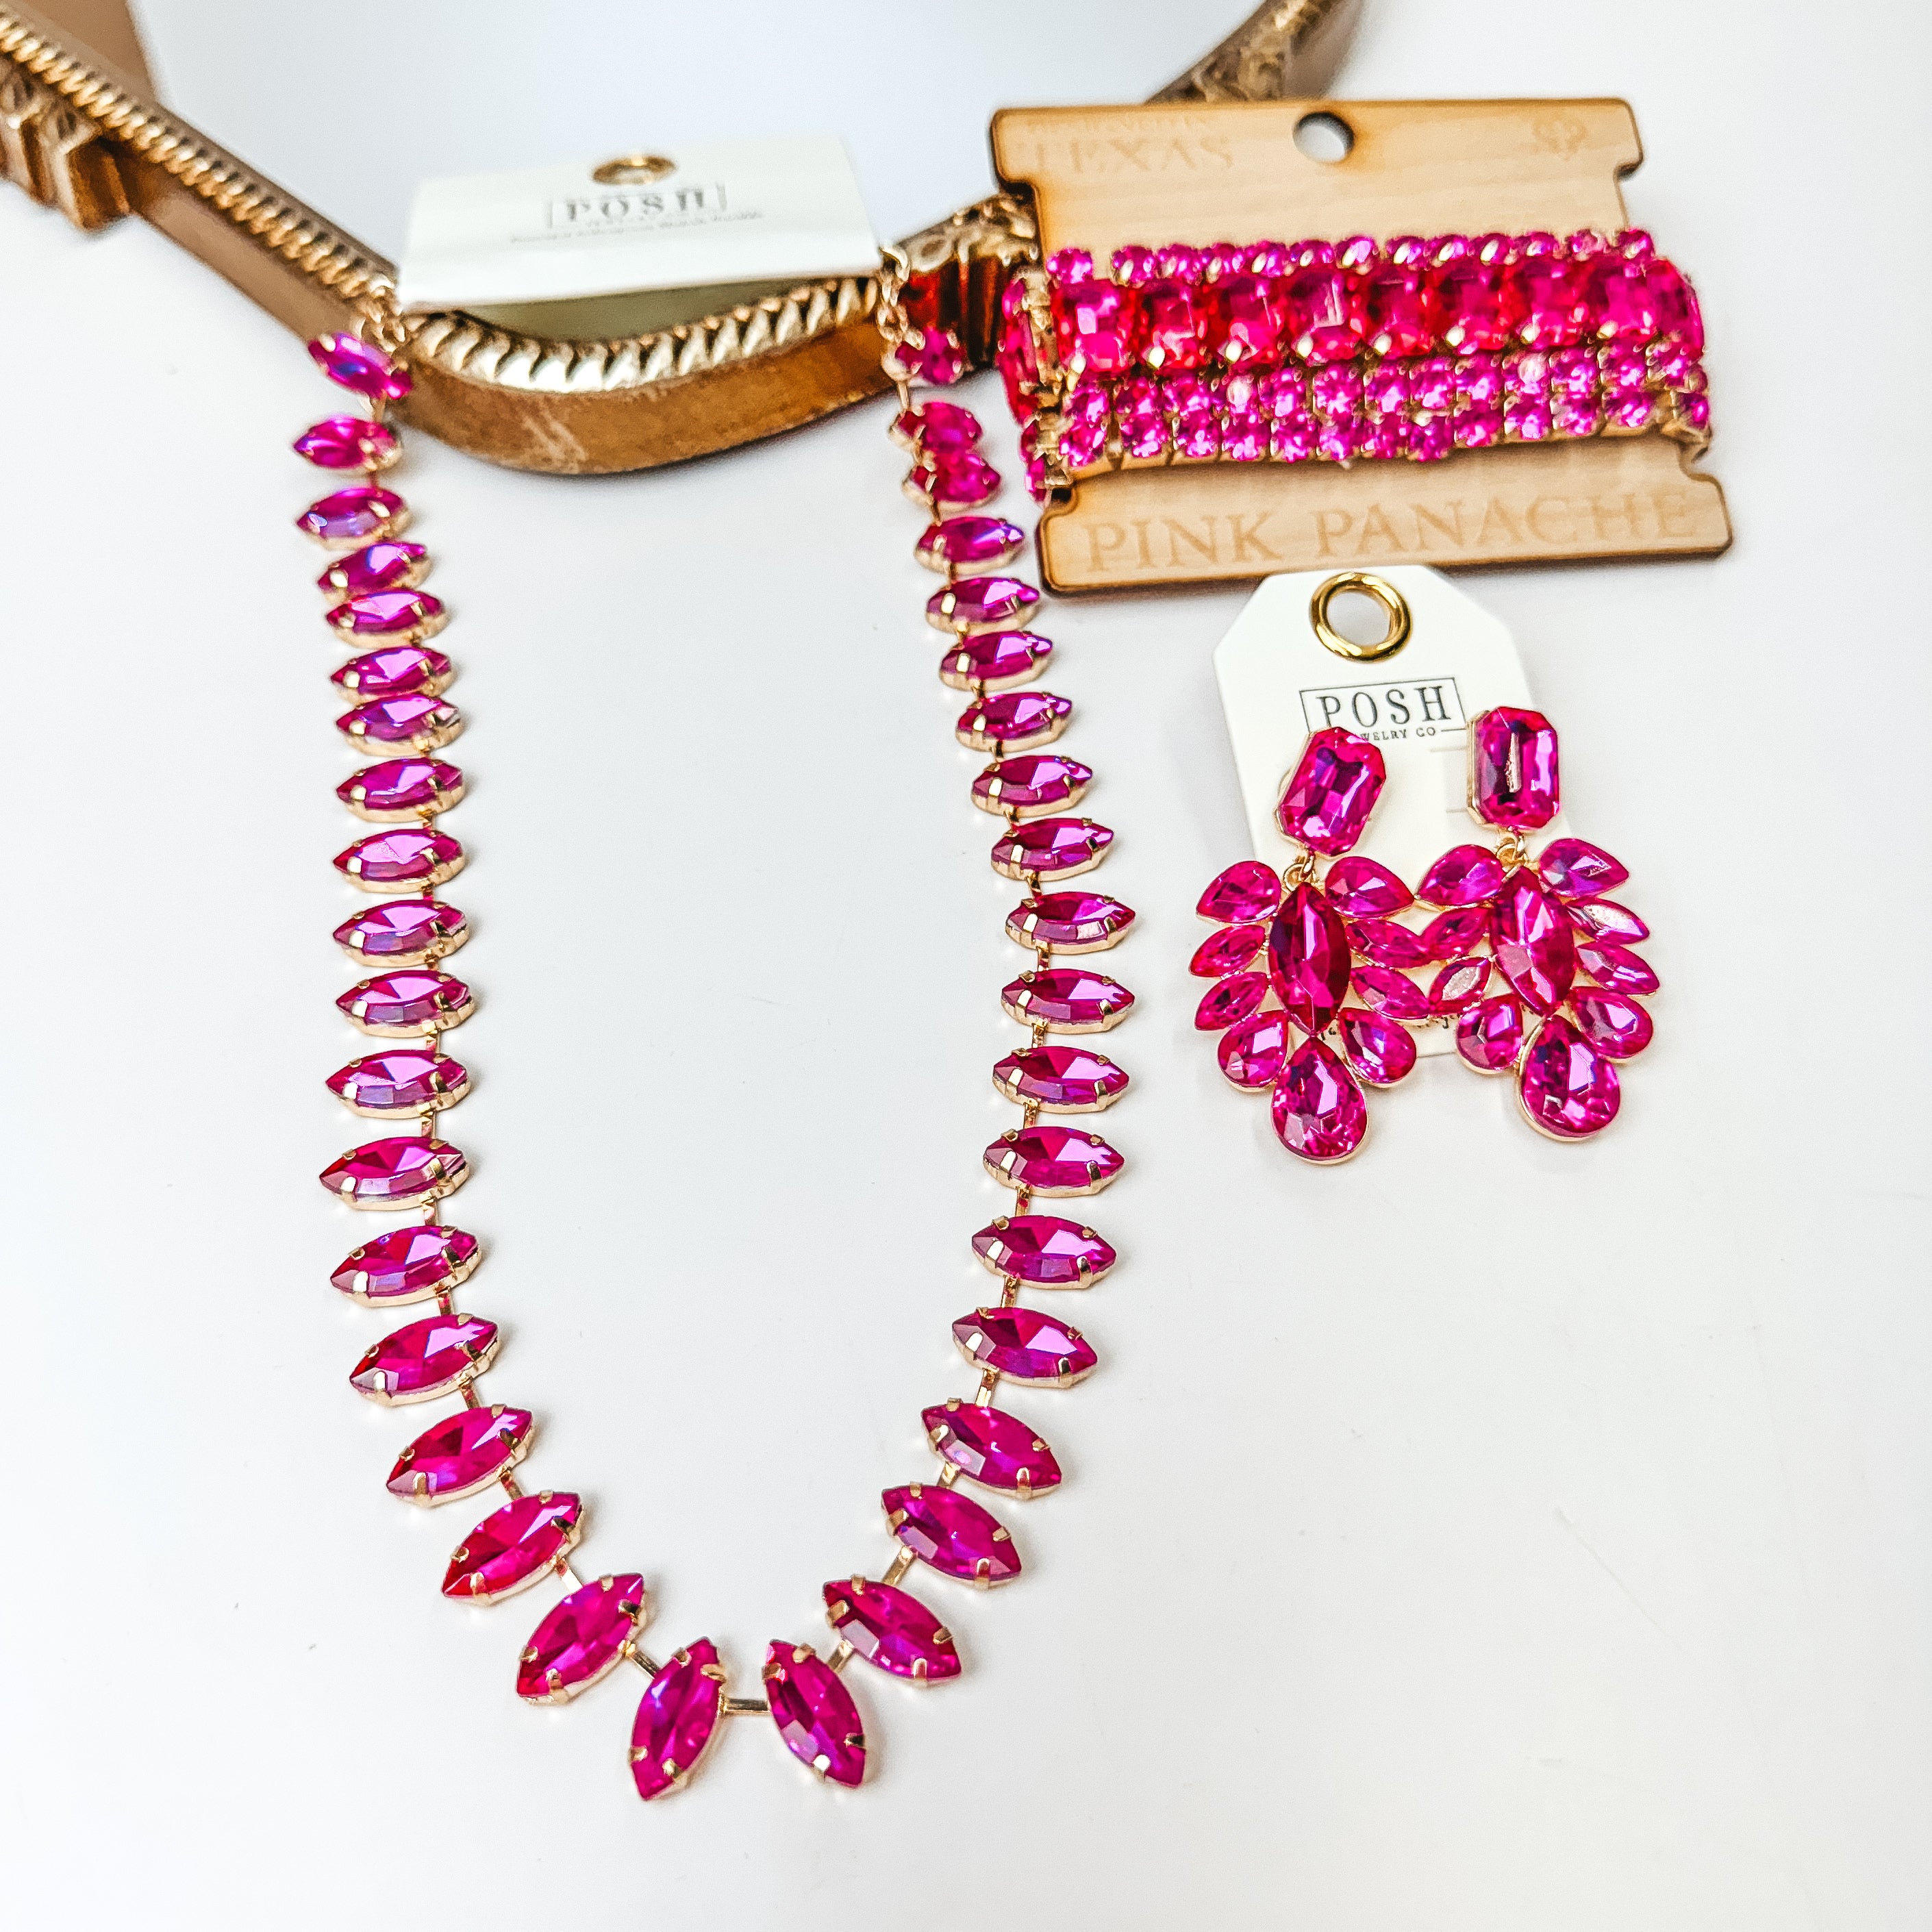 Pink Panache | Gold Tone Rhinestone Bracelet Set in Fuchsia Pink - Giddy Up Glamour Boutique